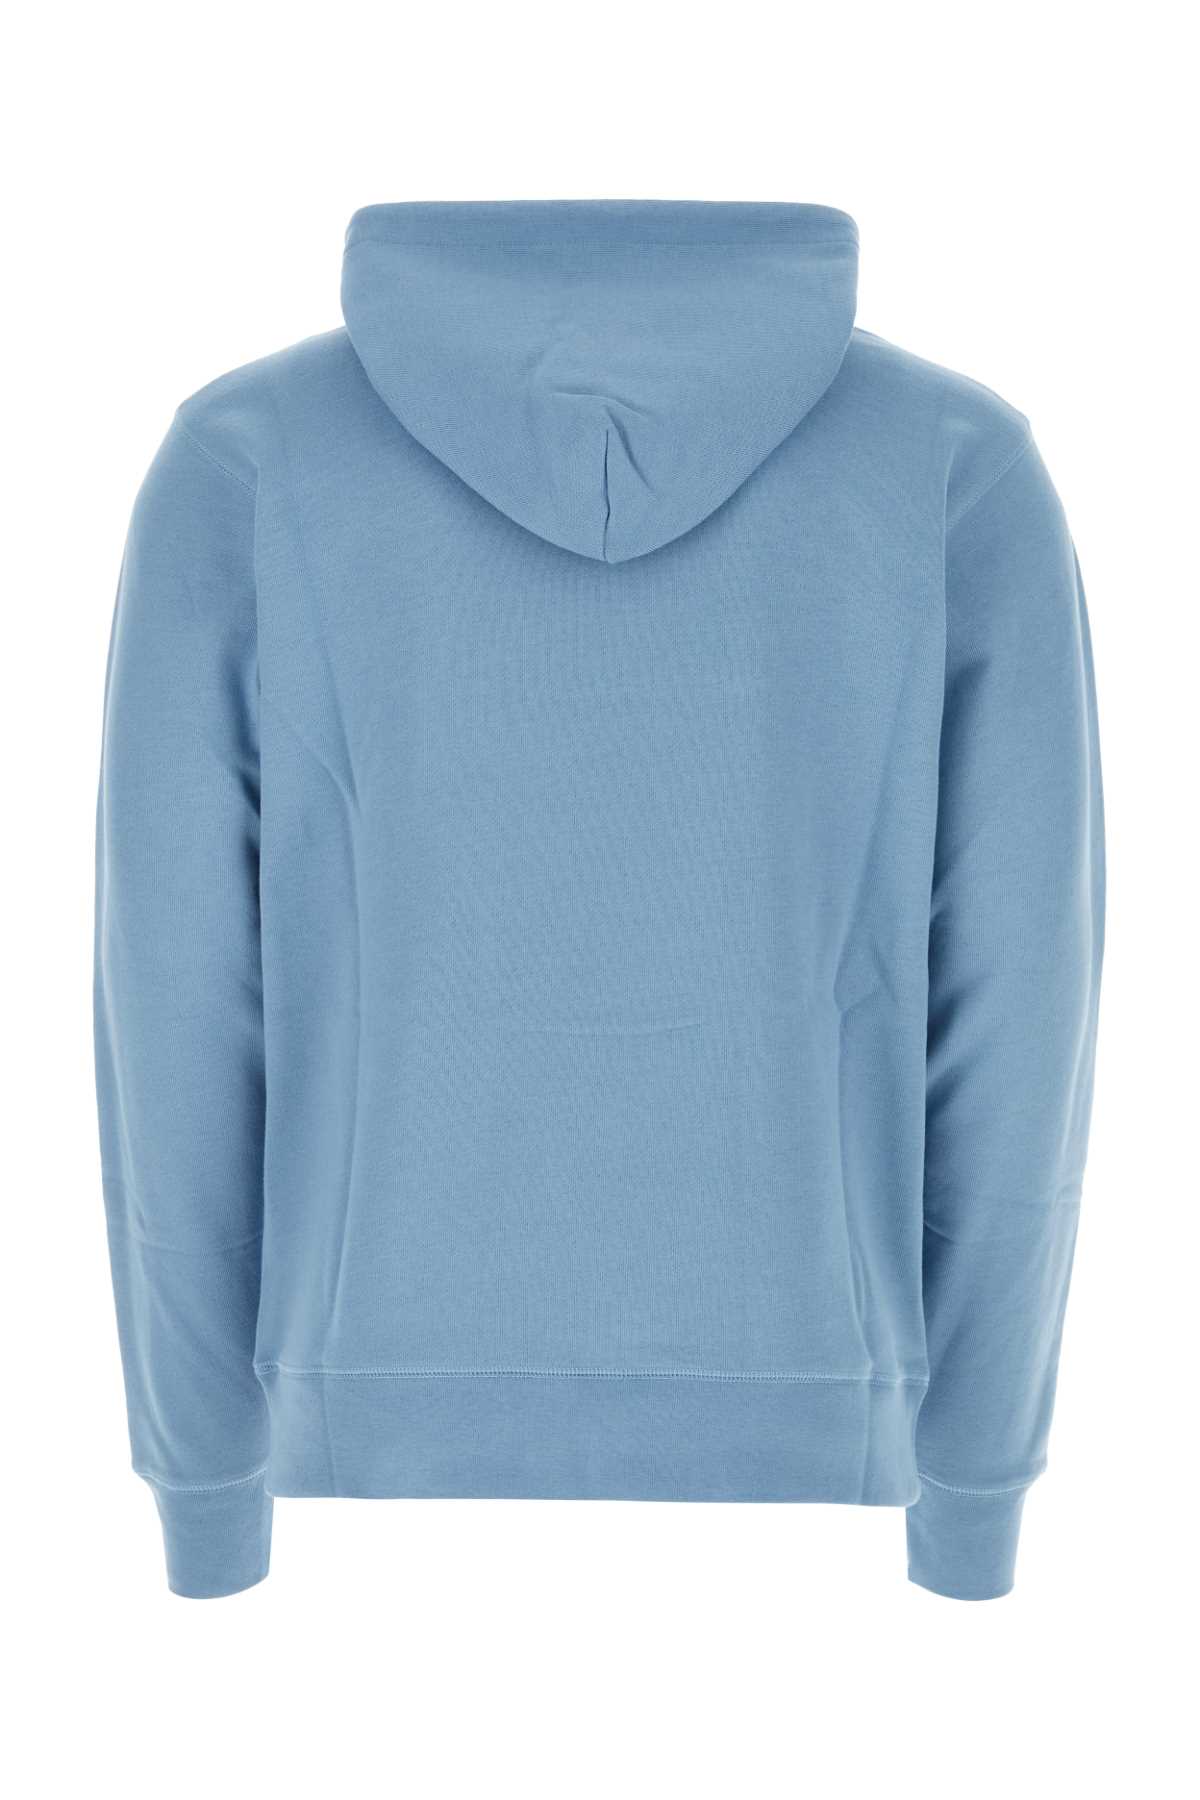 Billionaire Boys Club Light Blue Cotton Sweatshirt In Powderblue